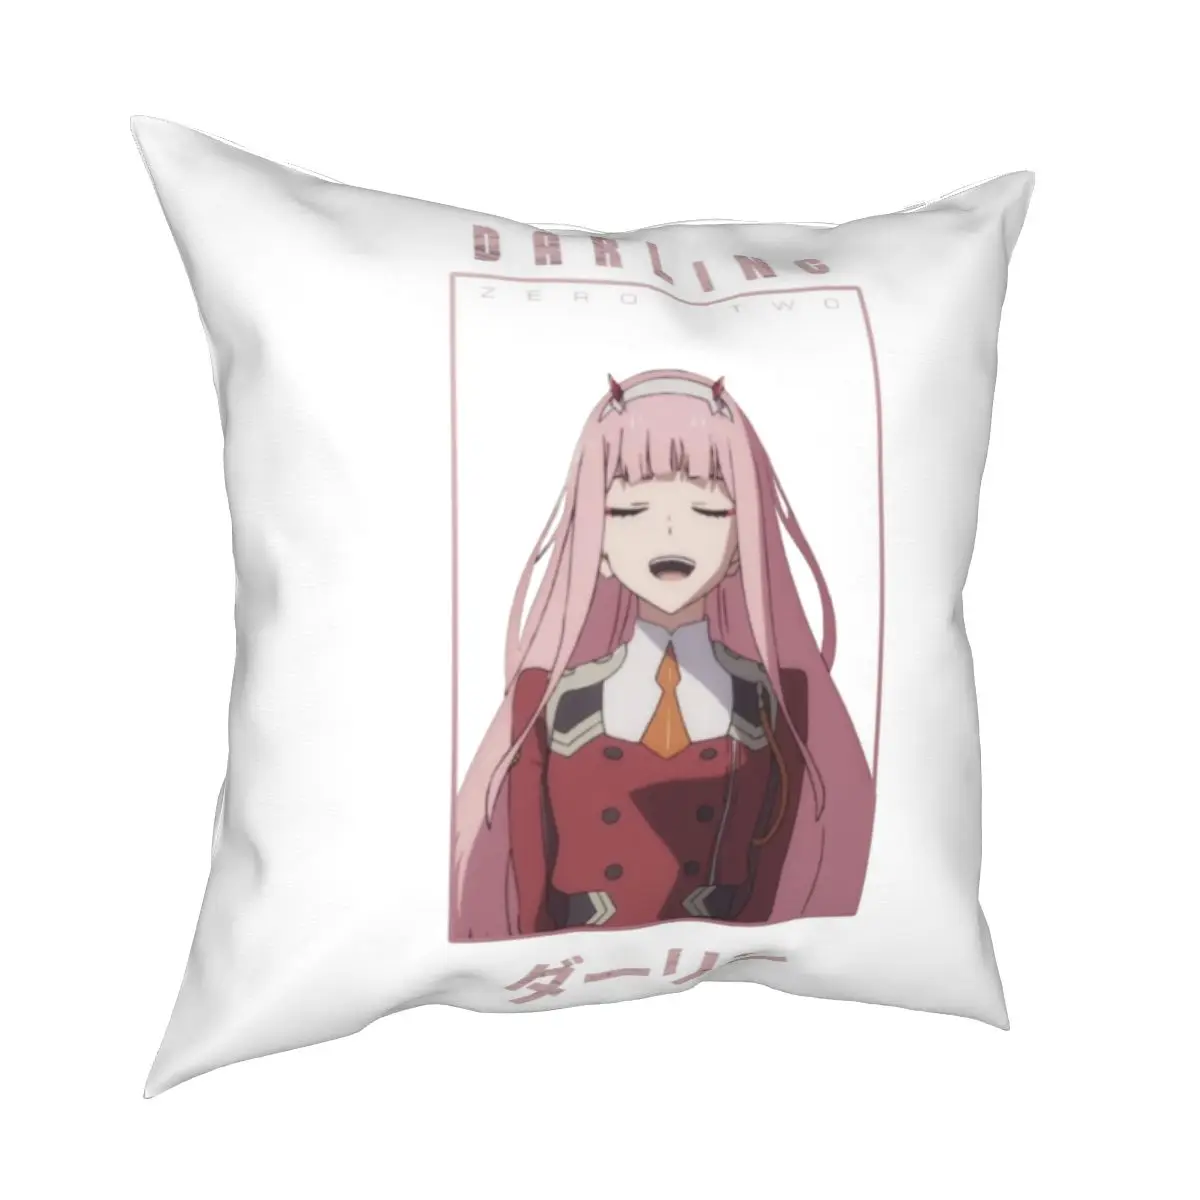 

Zero Two Darling In The Franxx Pillowcase Cushion Cover Decor 002 Waifu Anime Girl Pillow Case Cover Home 18'